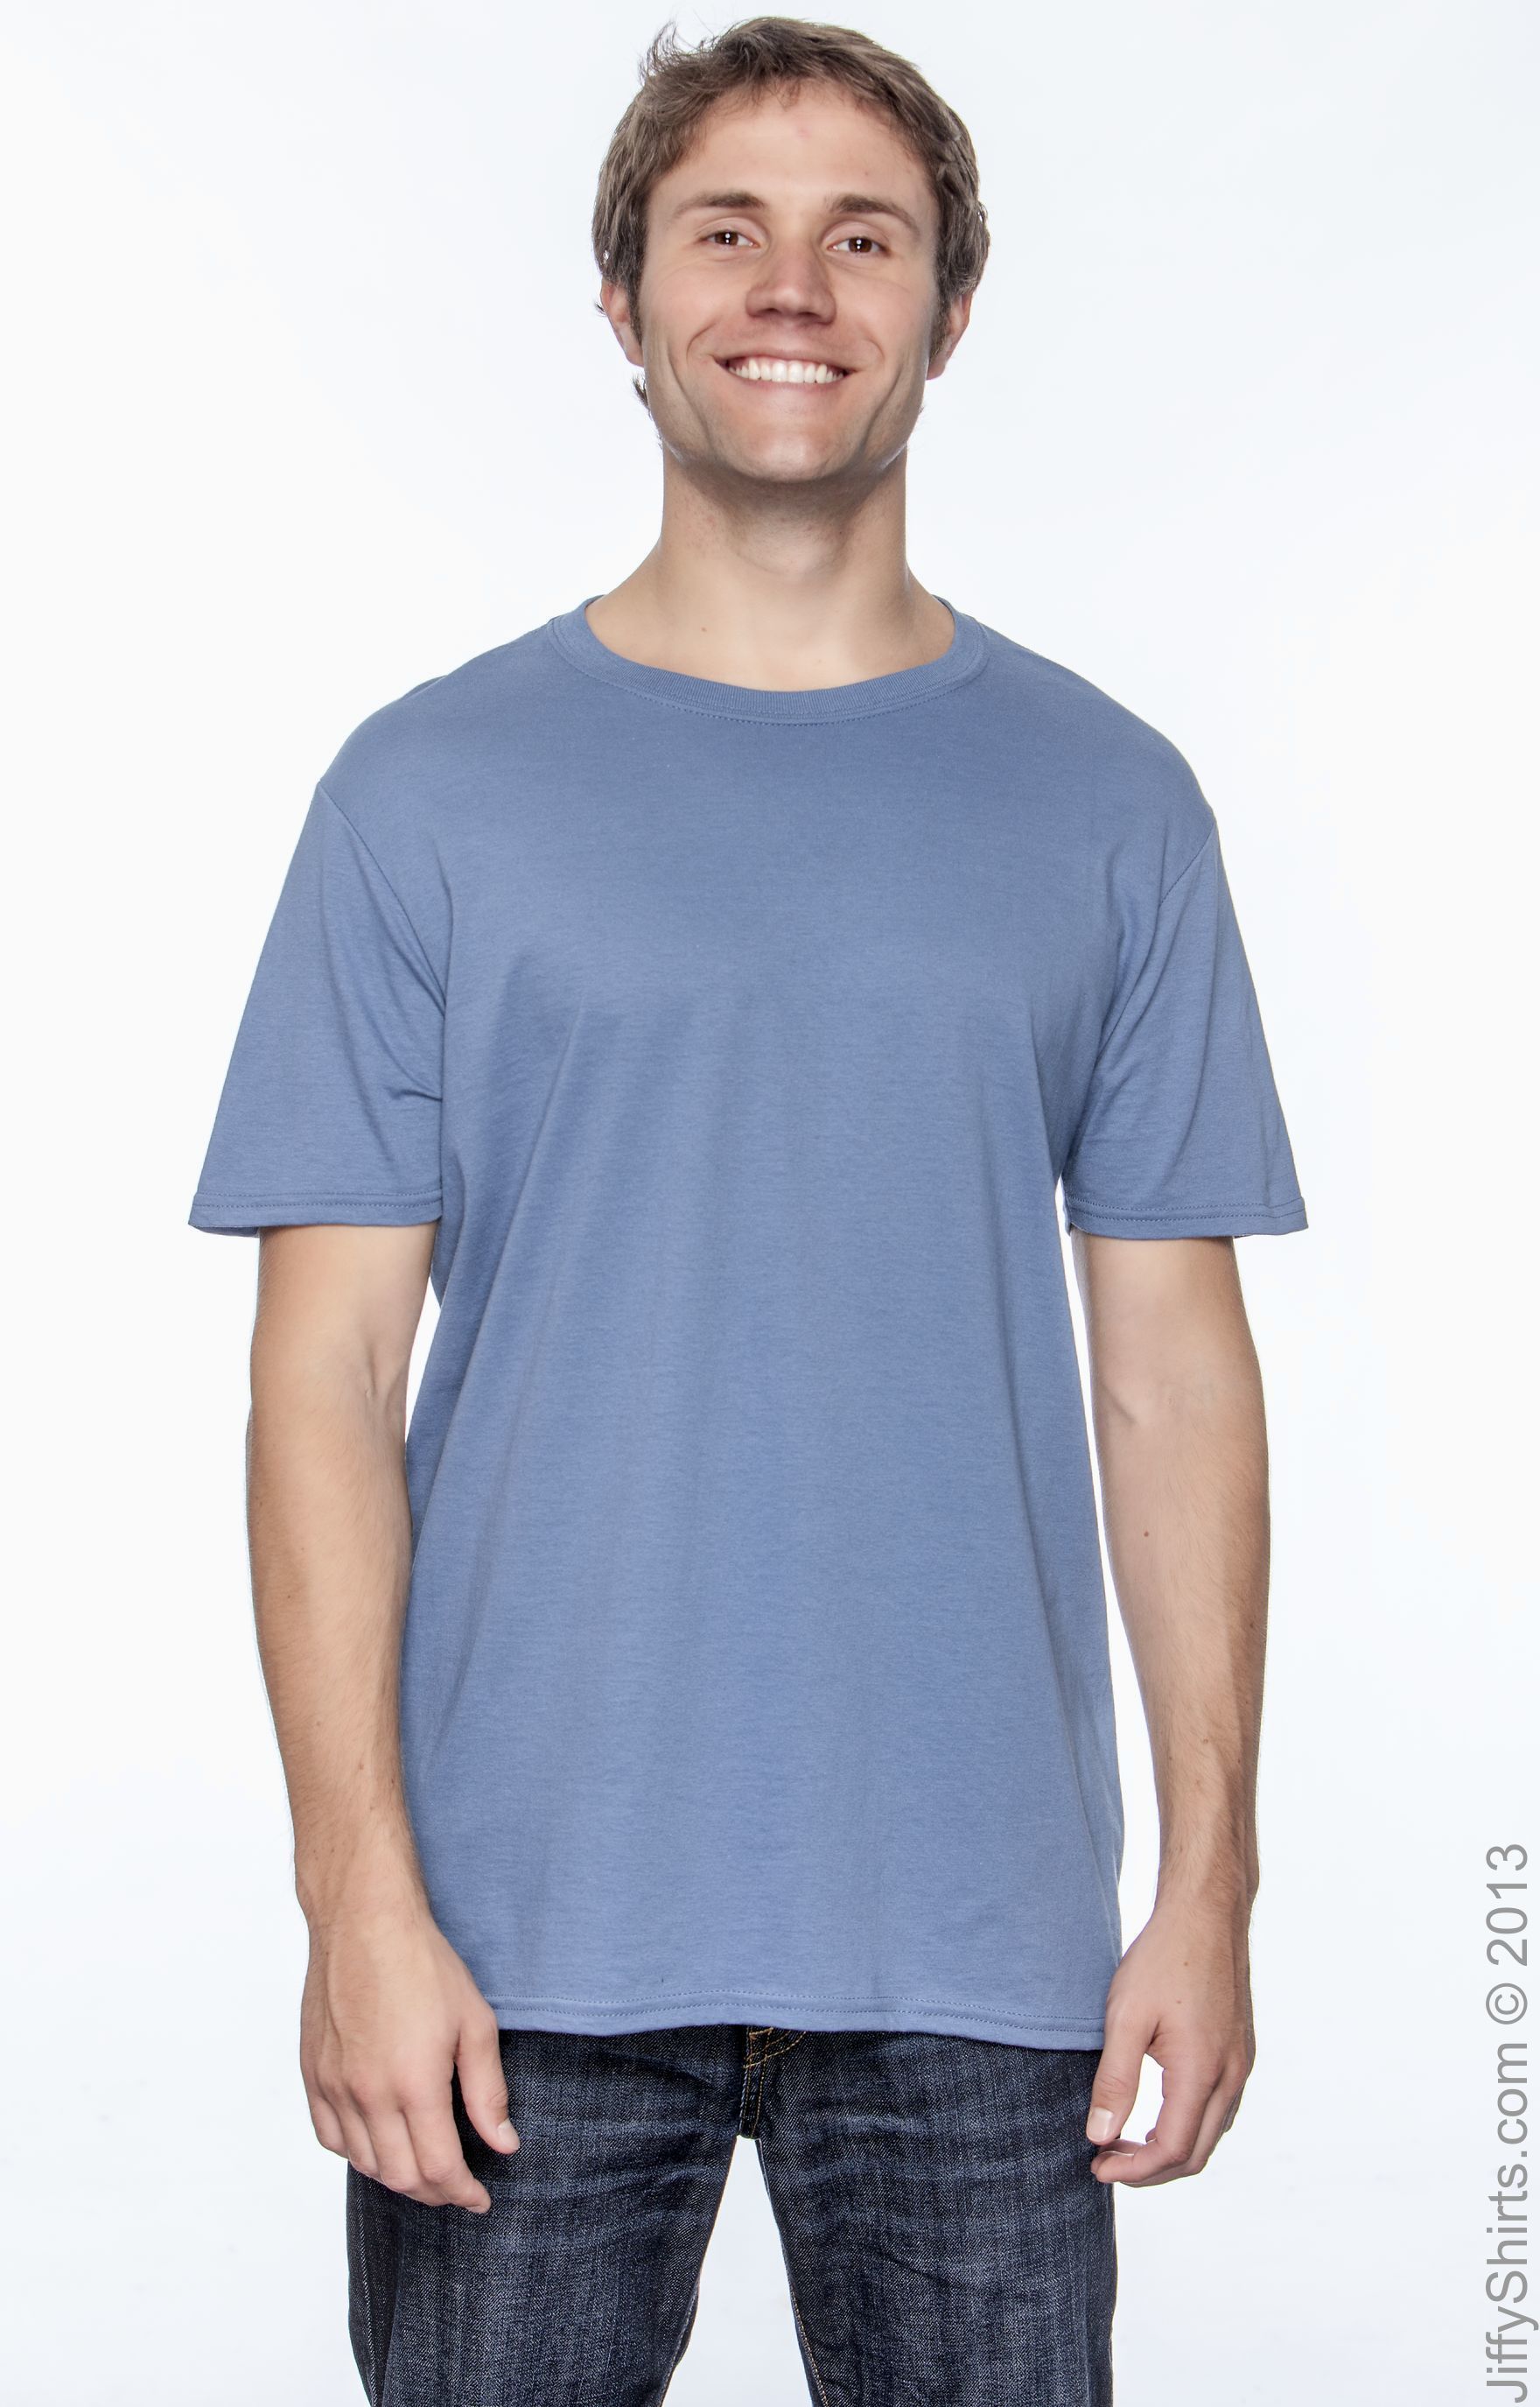 Lake T-shirt S M L 2XL Advice Unisex Blue Gildan 100% Cotton